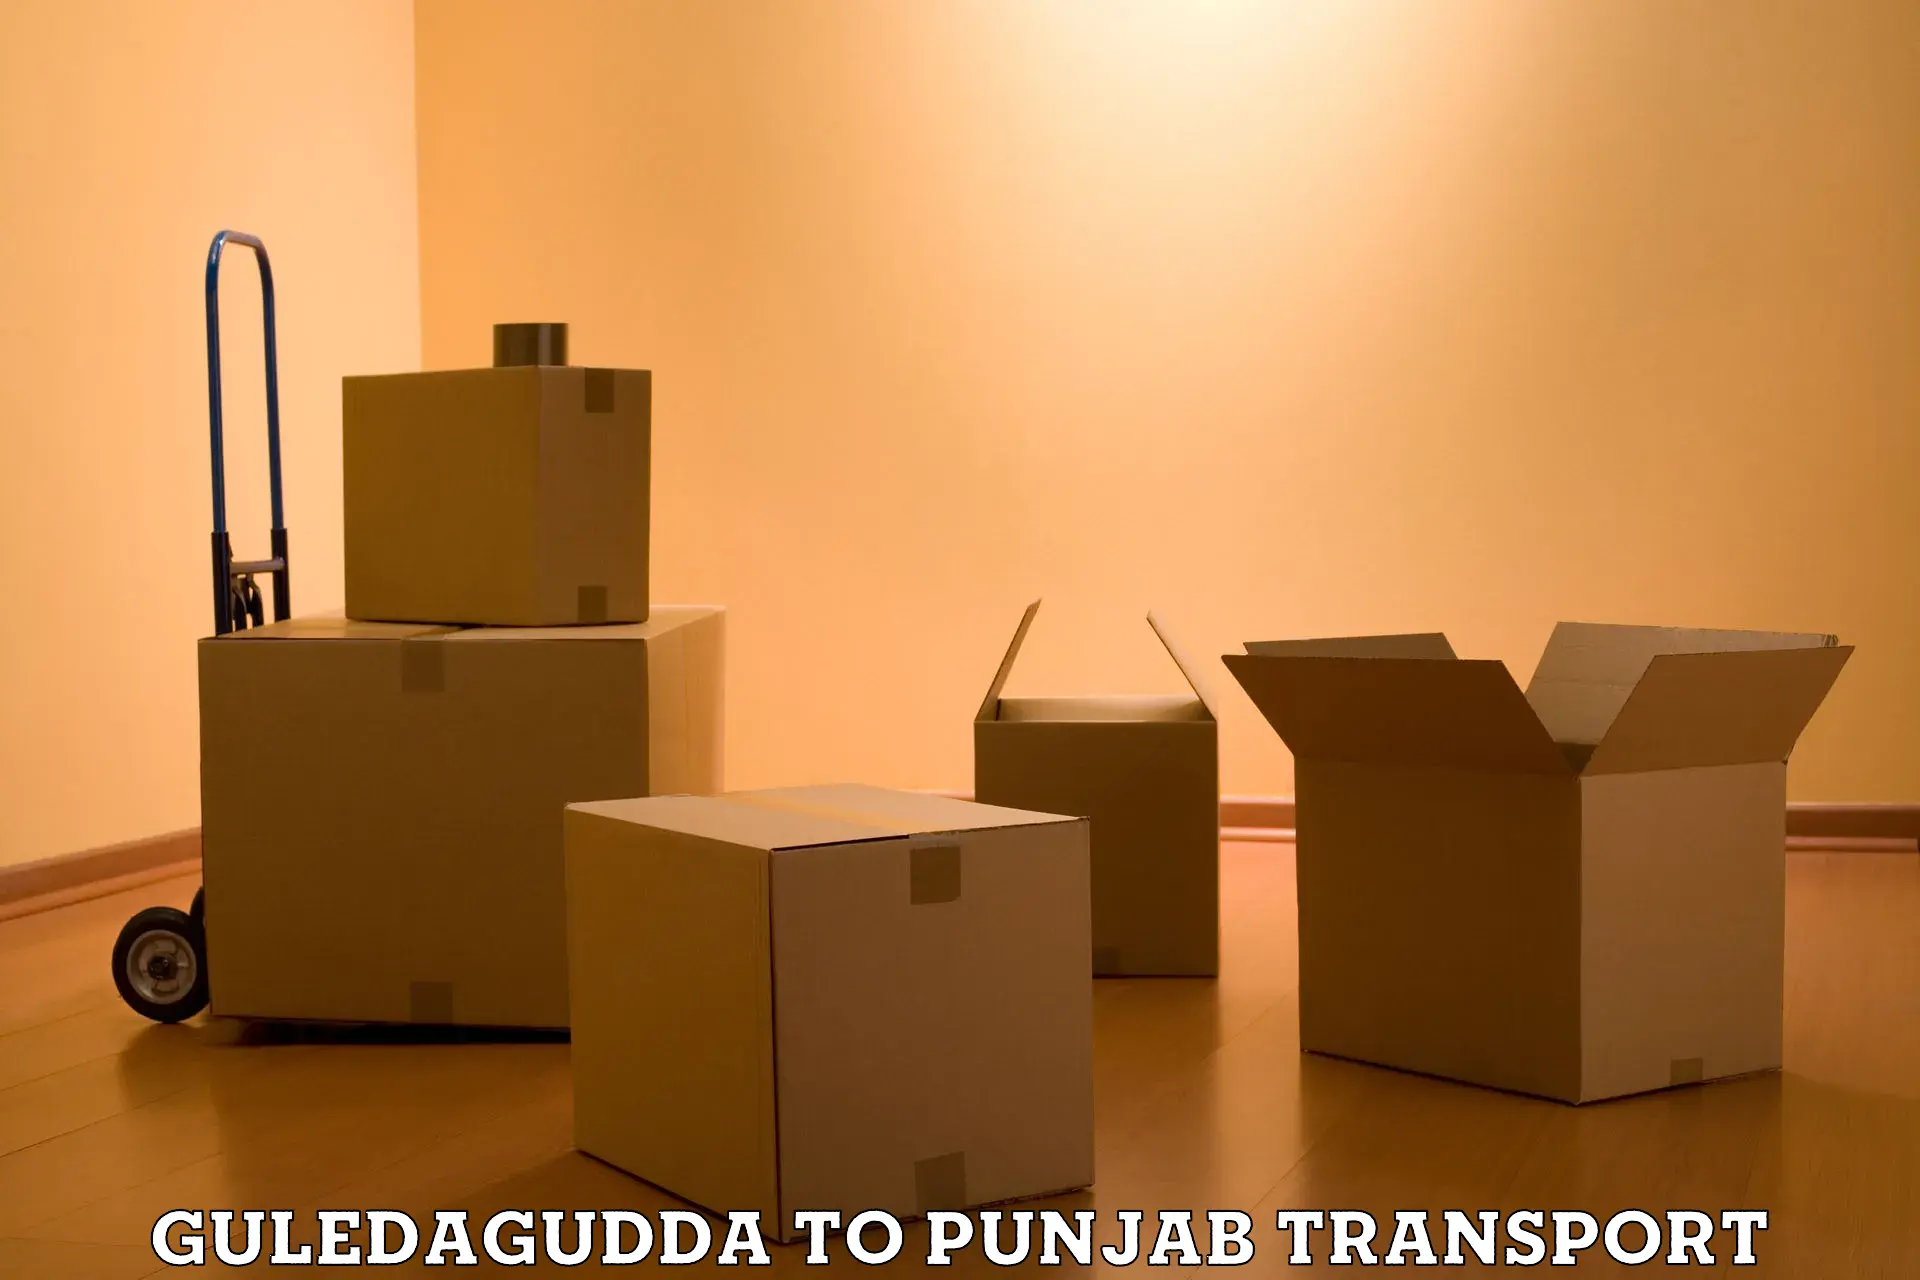 Commercial transport service Guledagudda to Zirakpur